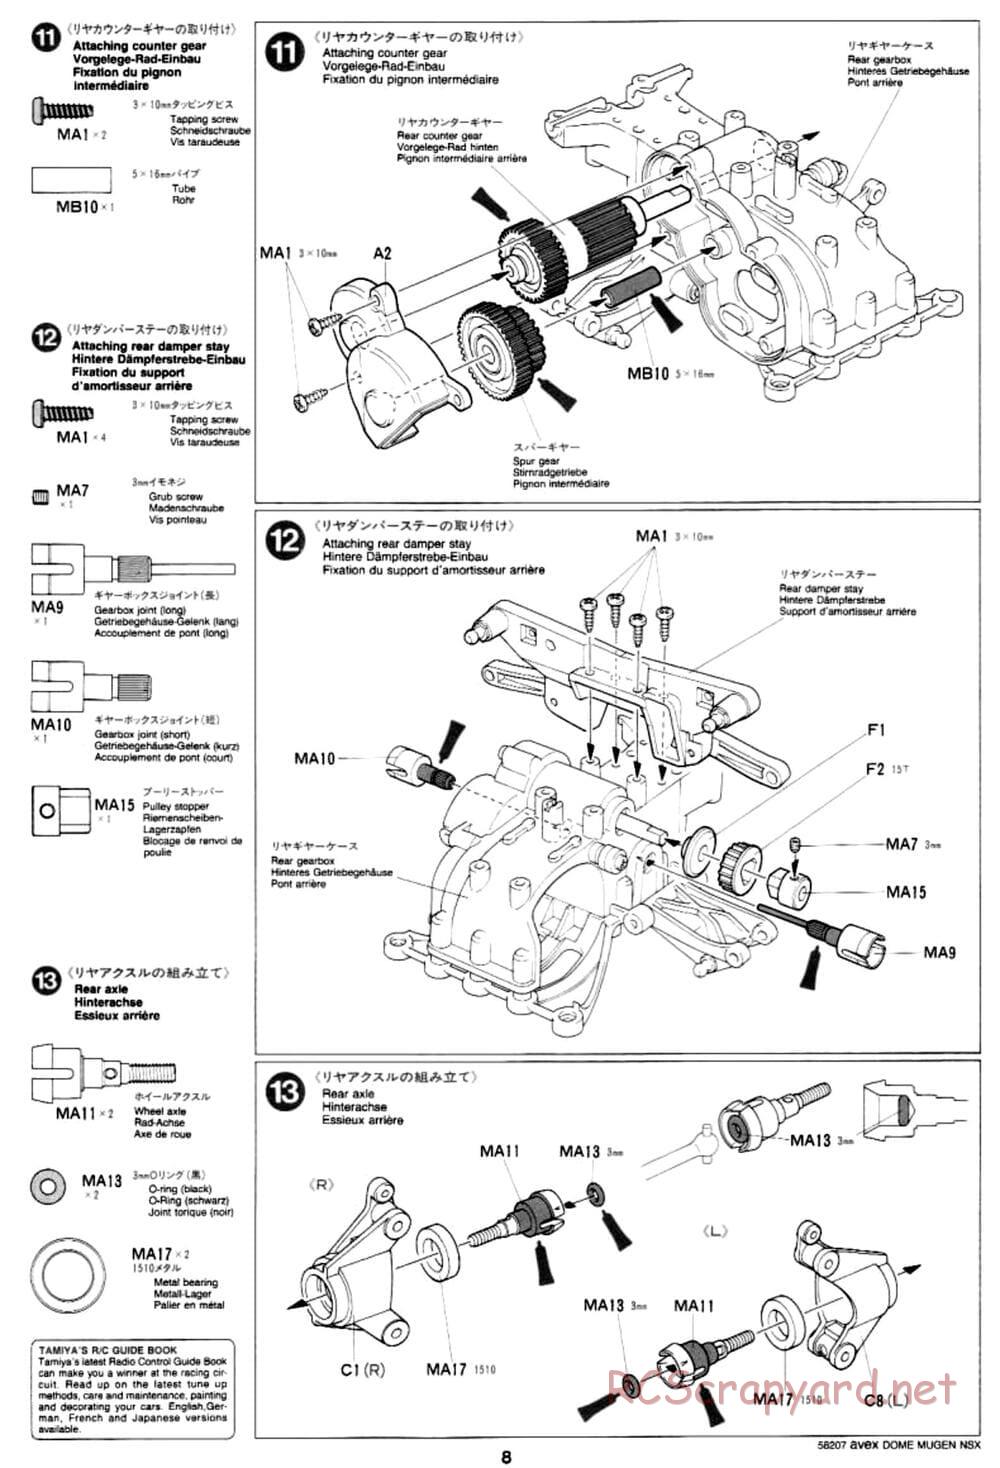 Tamiya - Avex Dome Mugen NSX - TA-03R Chassis - Manual - Page 8